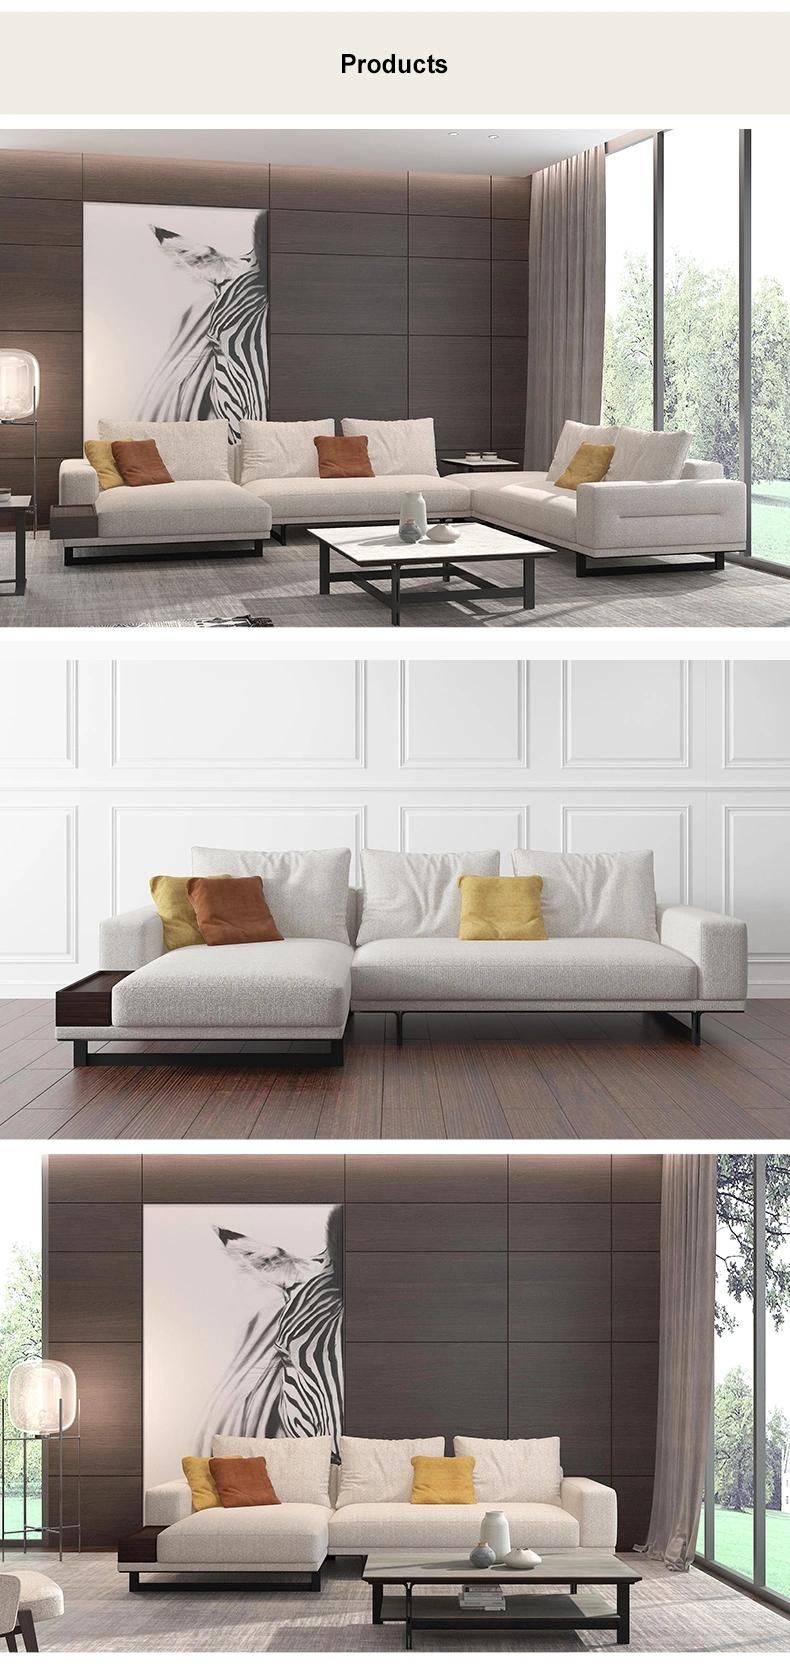 3 Corner Recliner Sectional Modern Living Room Furniture Fabric Sofa